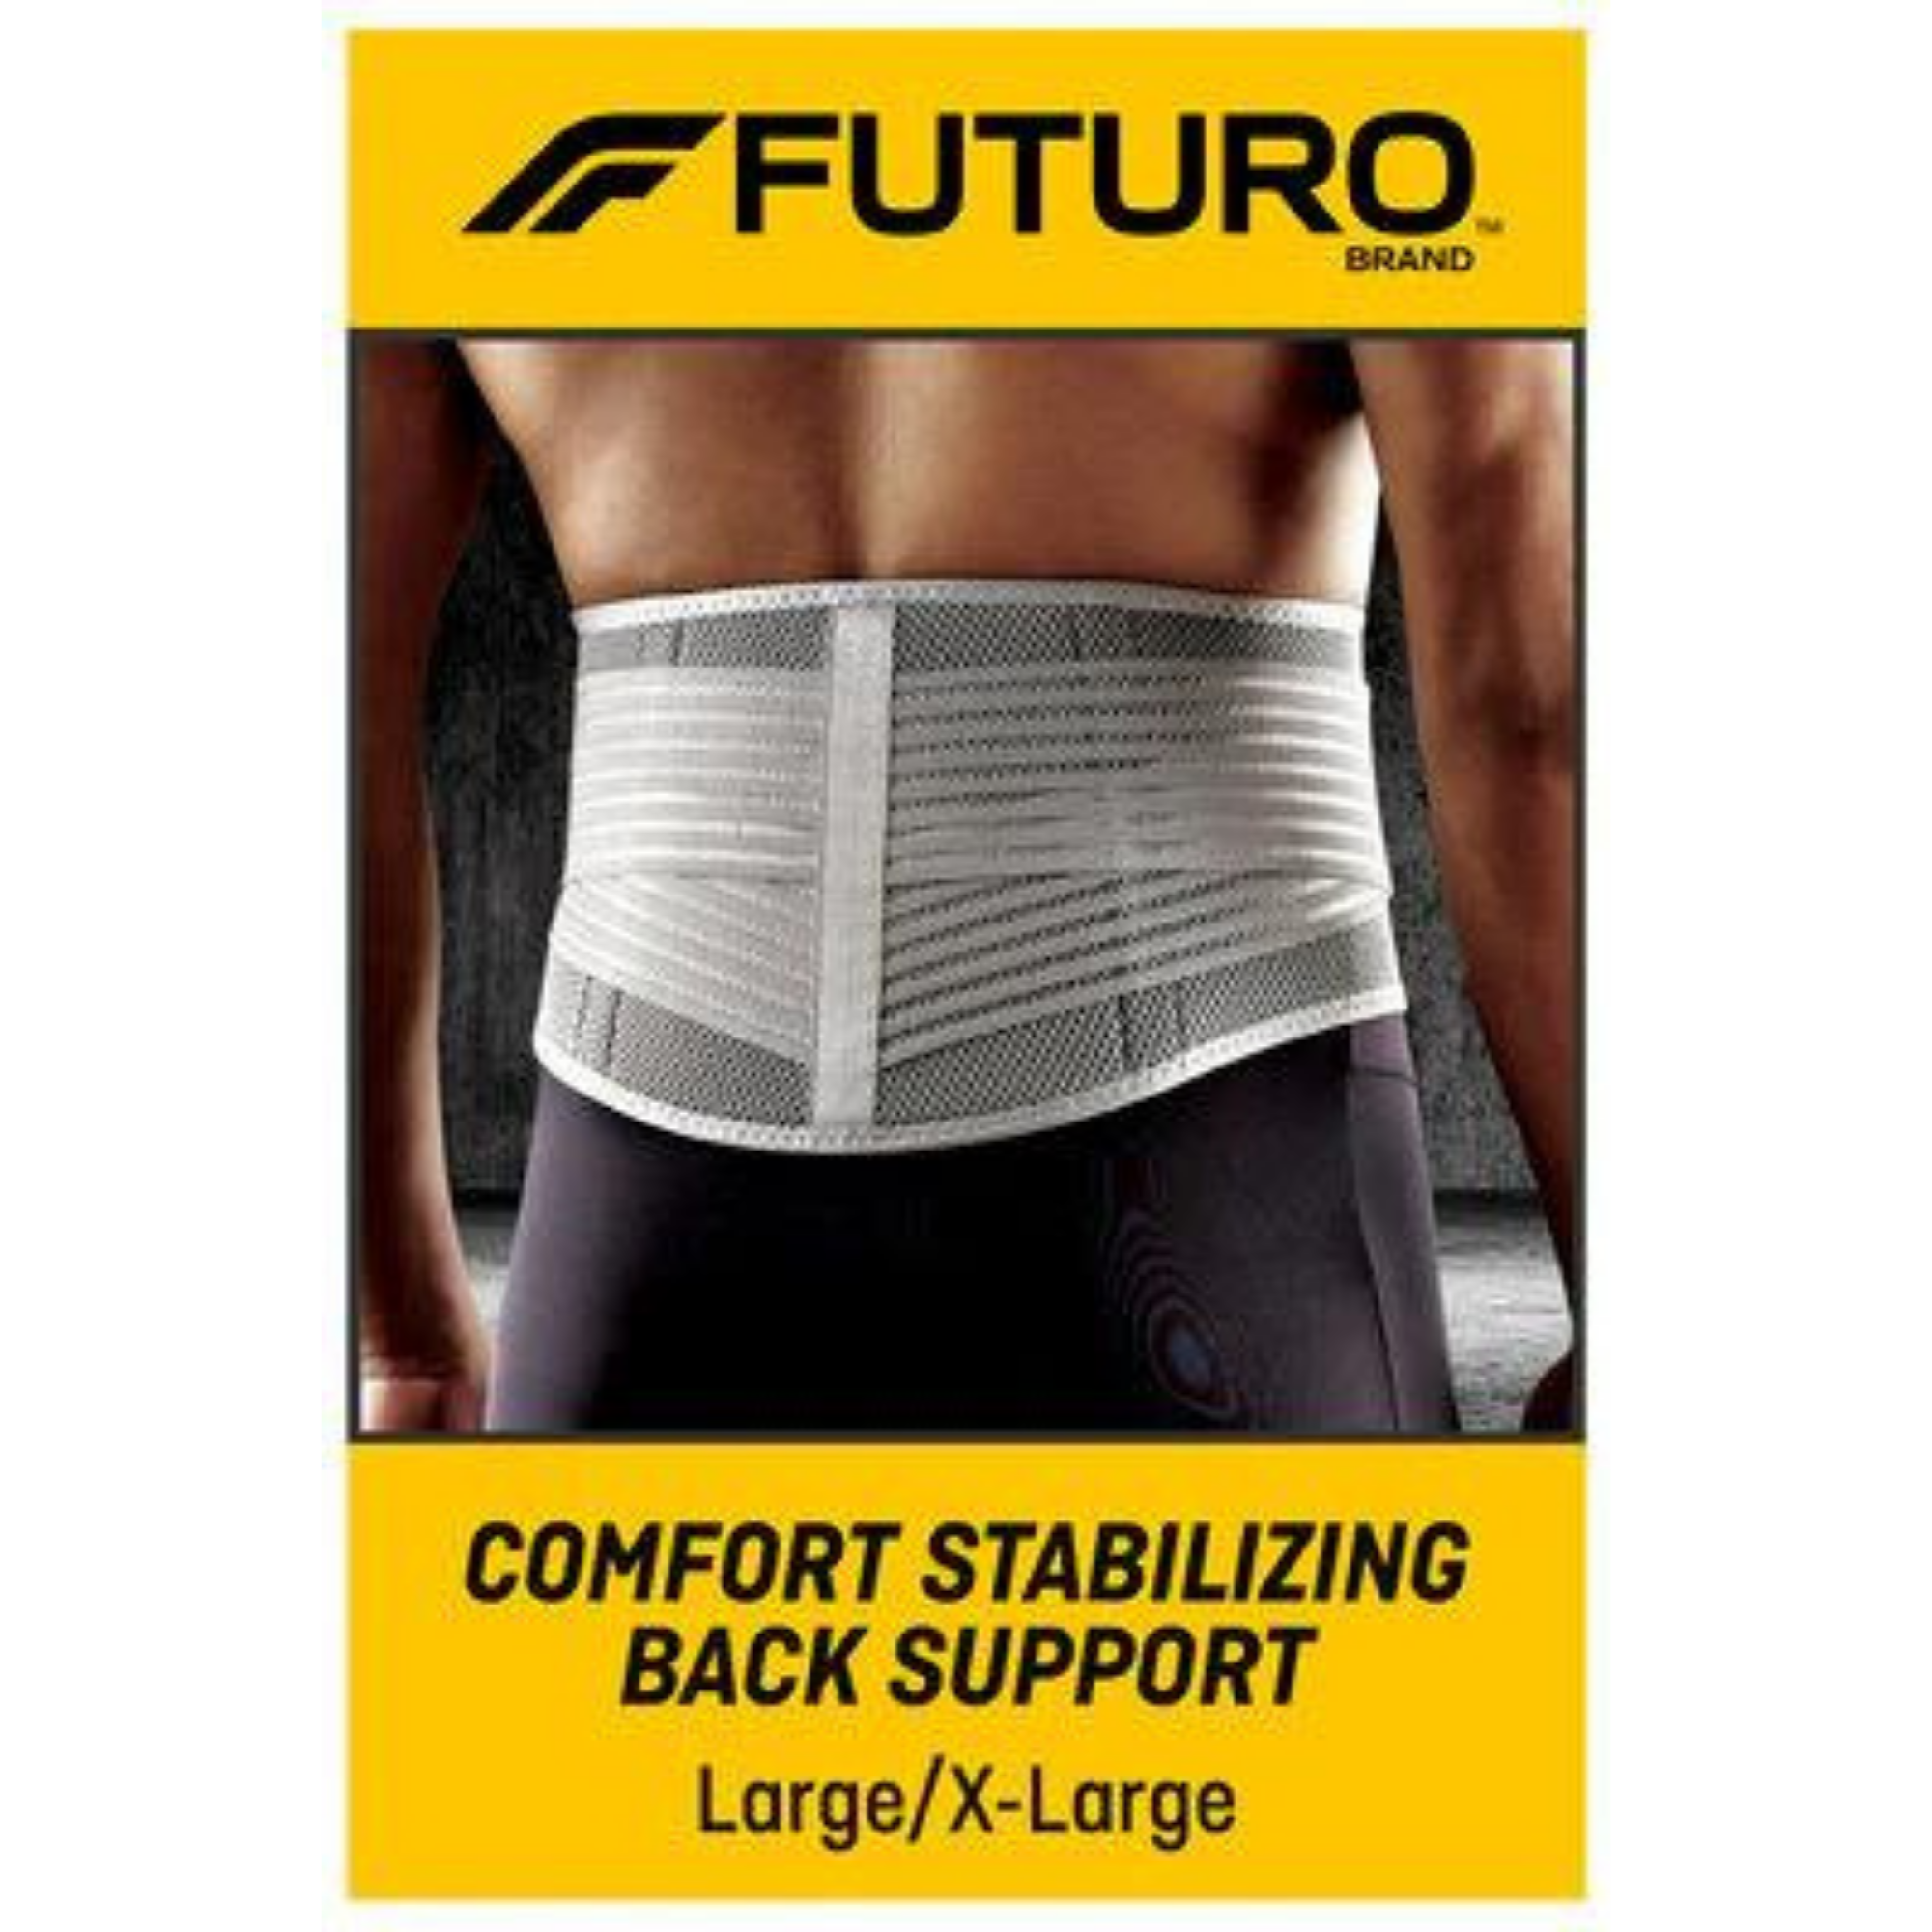 Futuro Comfort Stabilizing Back Support 46816ENR Large/X-Large